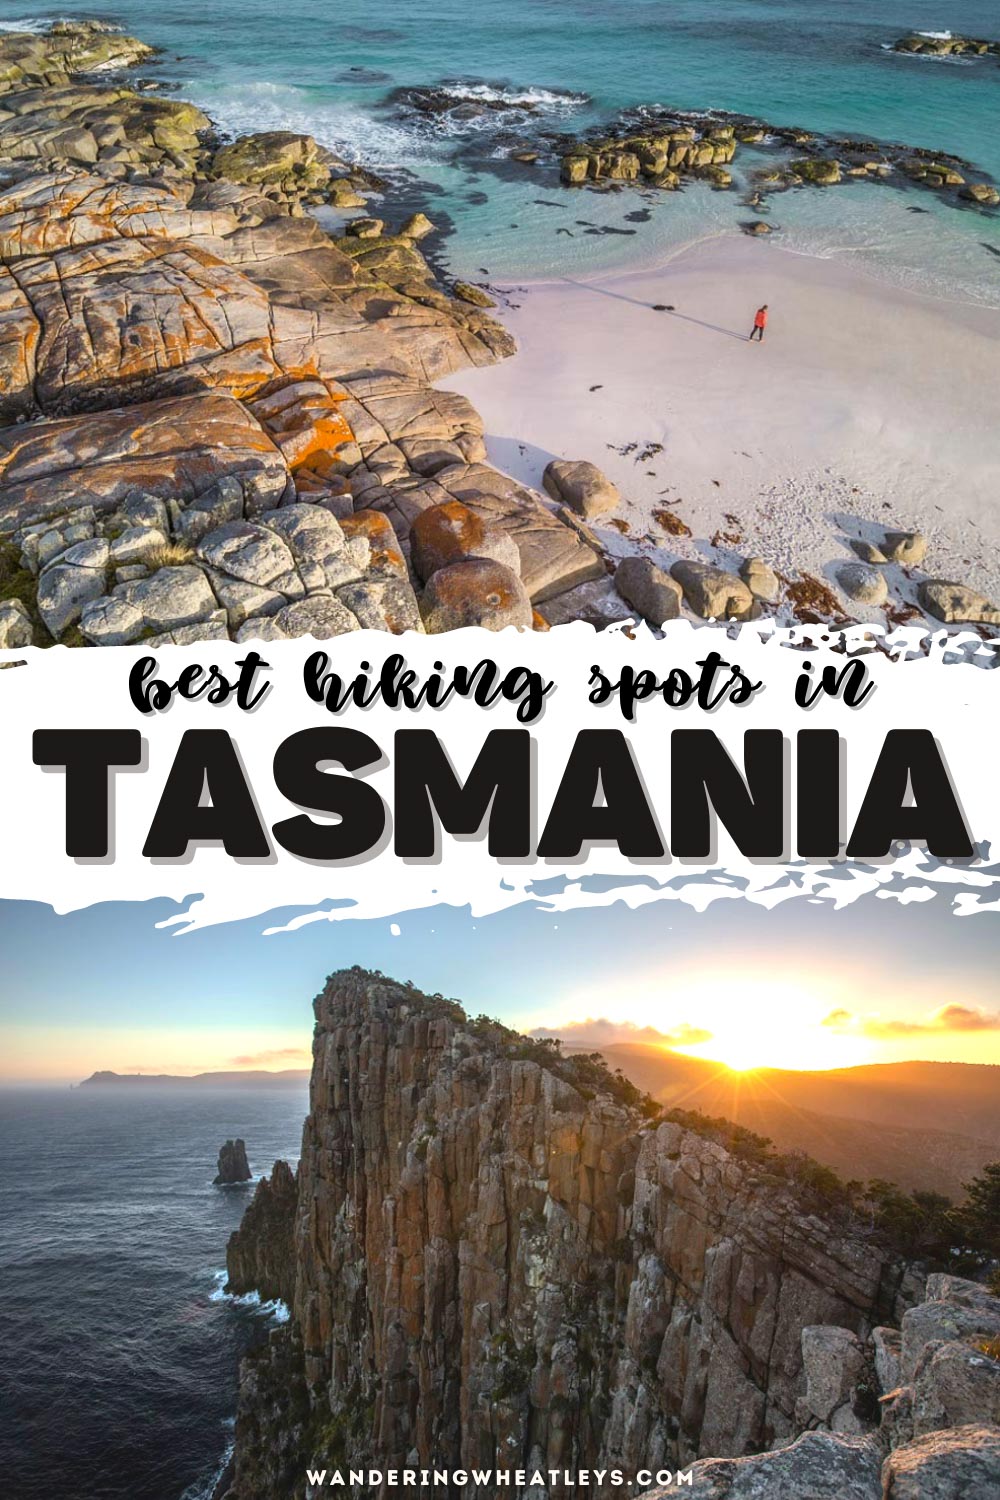 Tasmania Hiking Guide